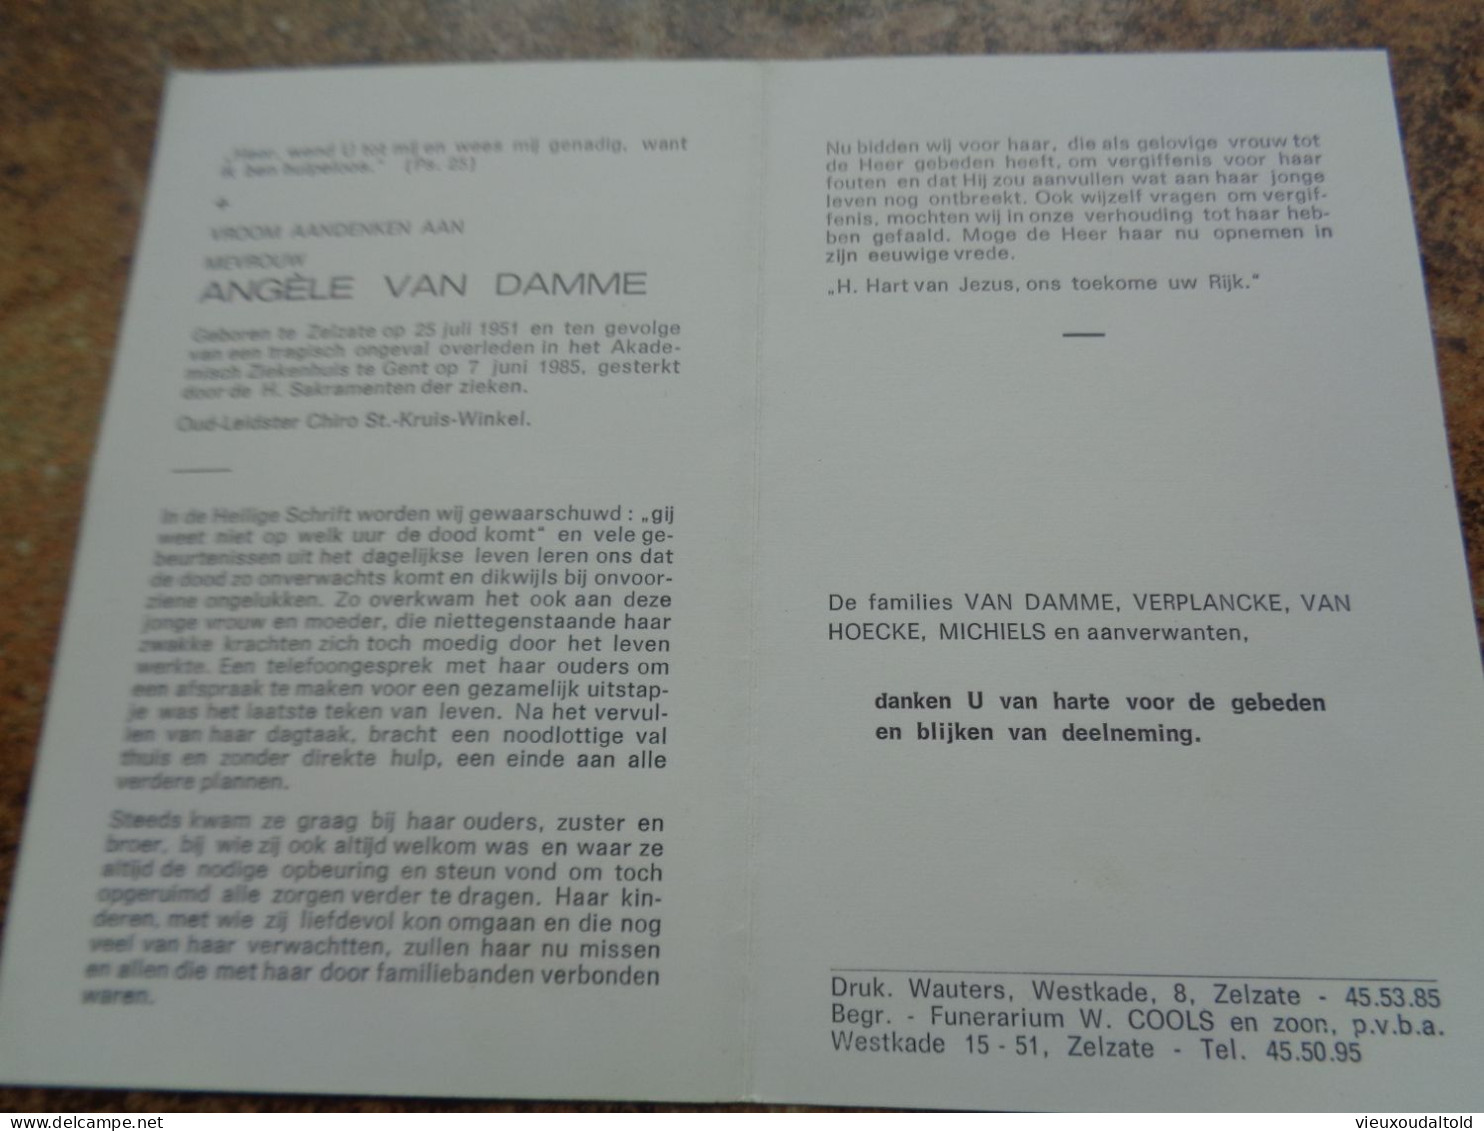 Doodsprentje/Bidprentje   ANGÈLE VAN DAMME   Oud-Leidster Chiro St Kruis Winkel      Zelzate 1951-1985 Gent - Godsdienst & Esoterisme